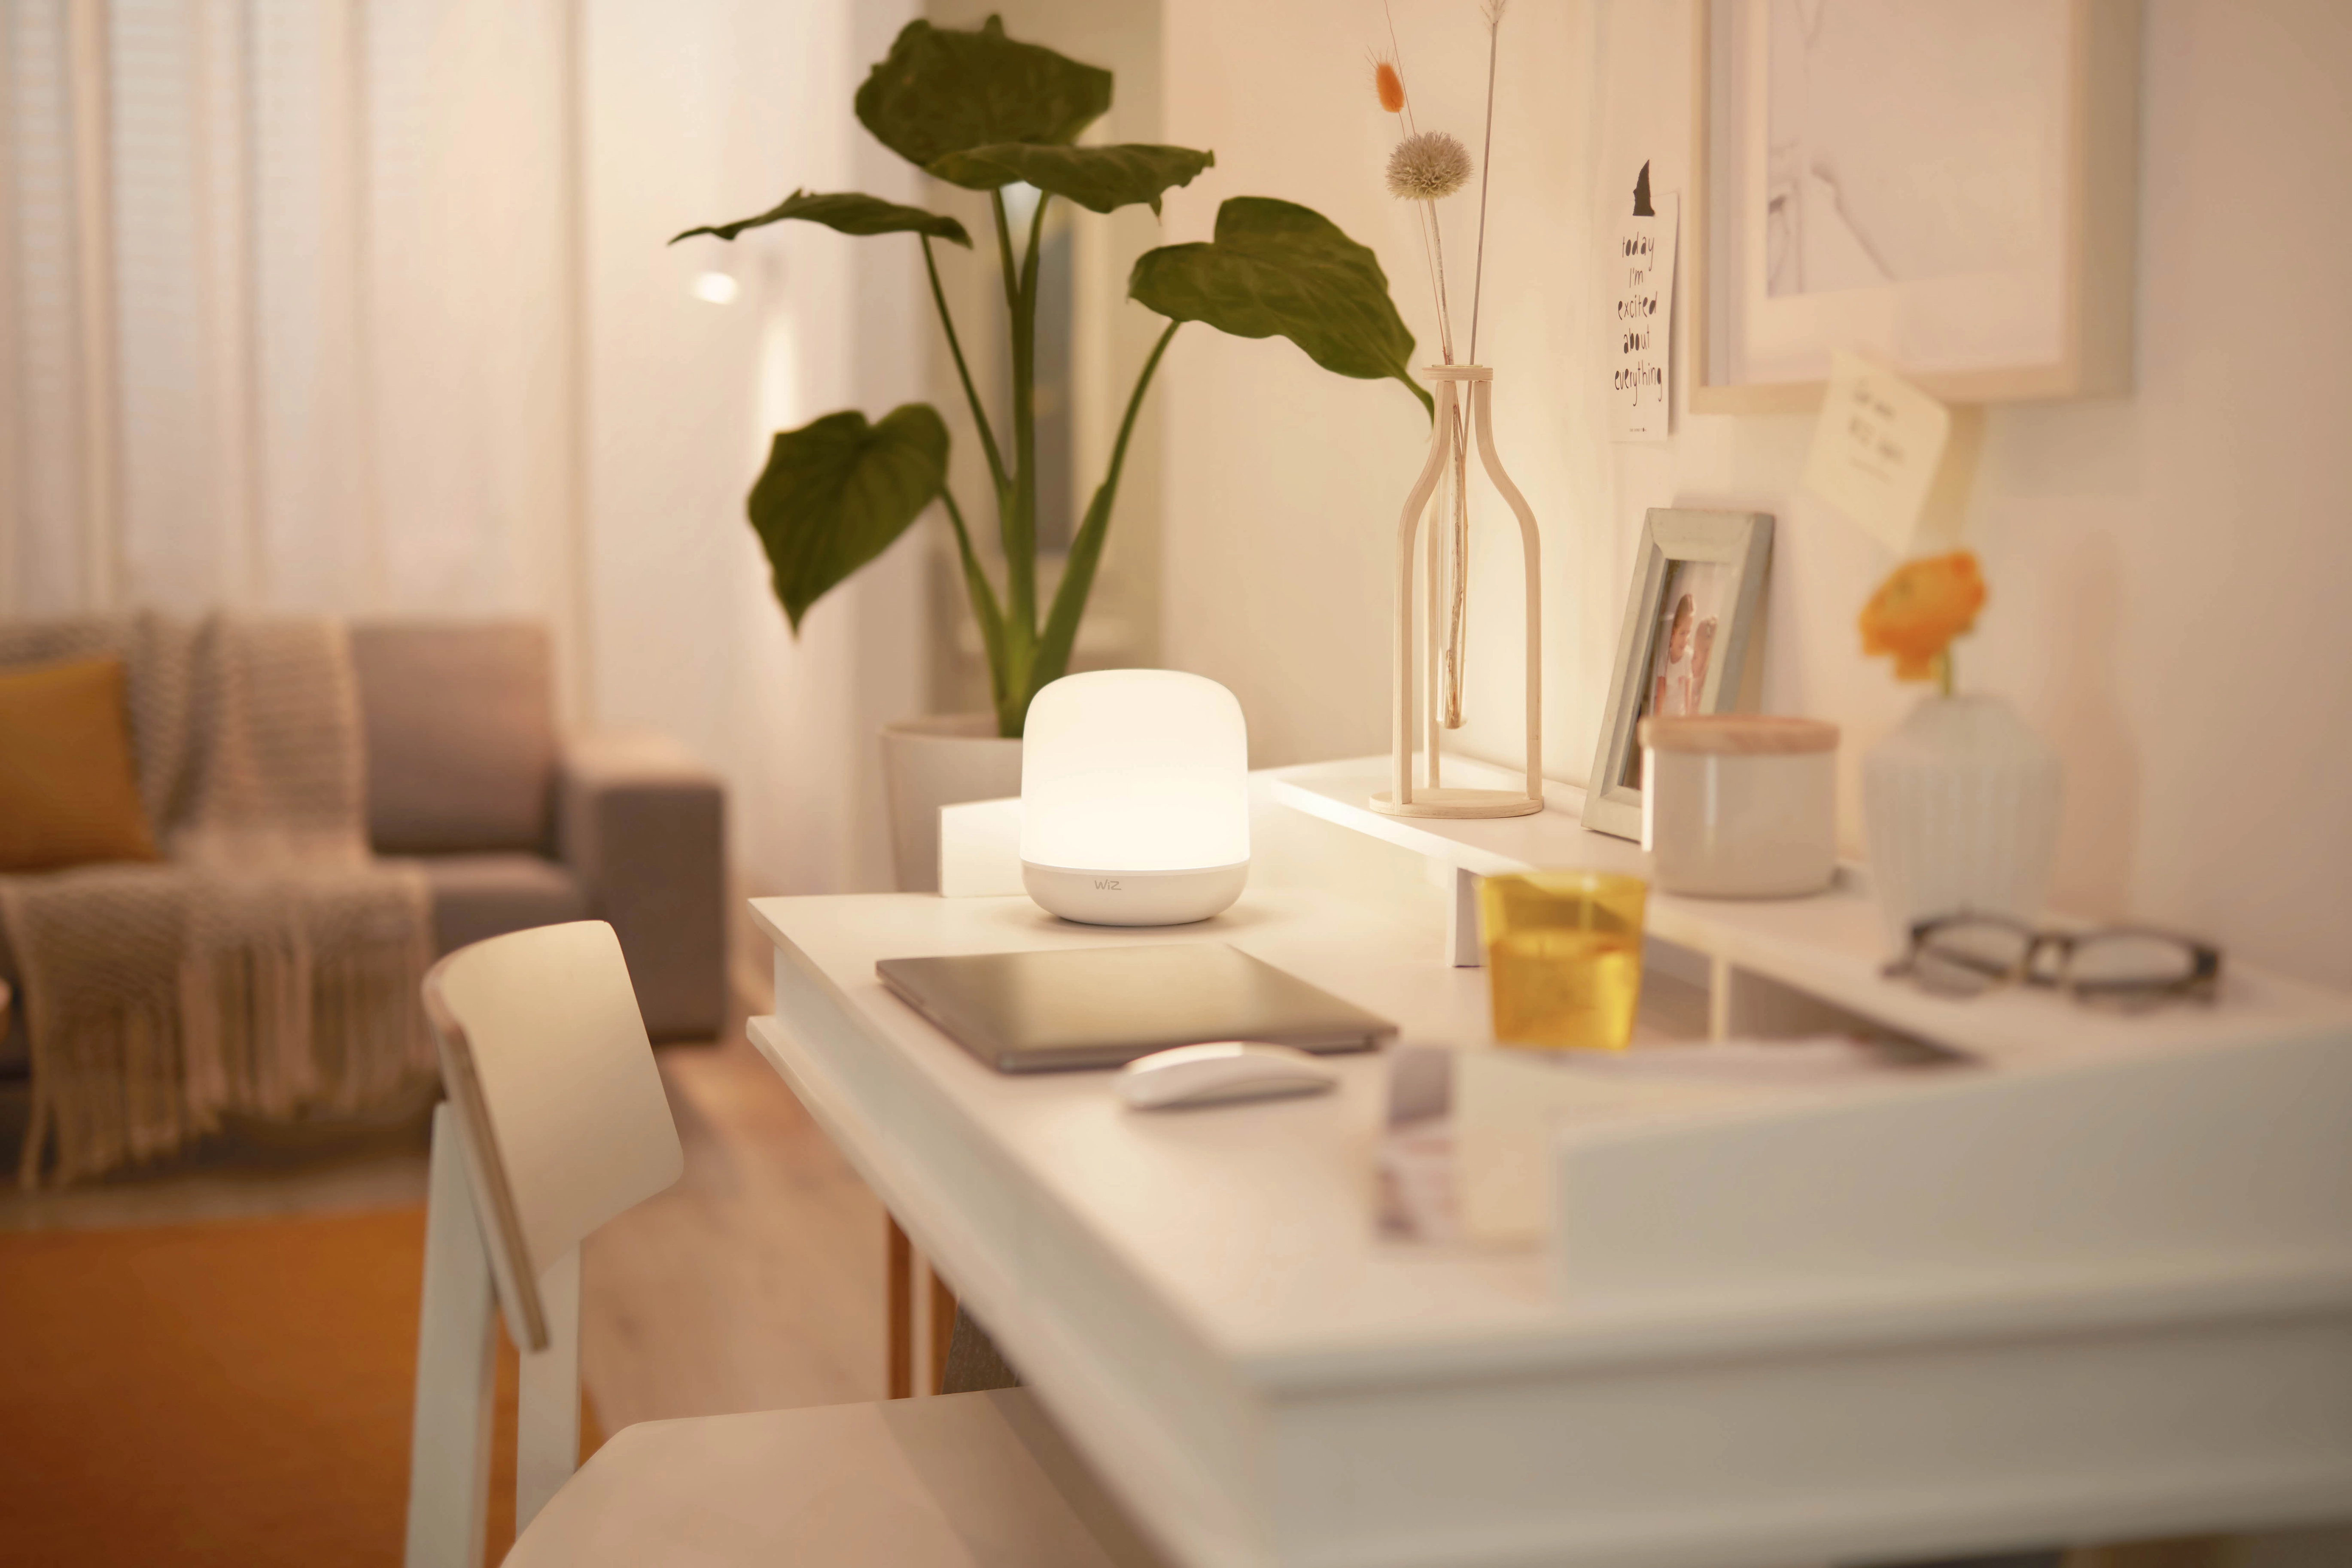 WiZ Tischleuchte E27 OBI Hero bei LED-Lampe Philips kaufen inkl